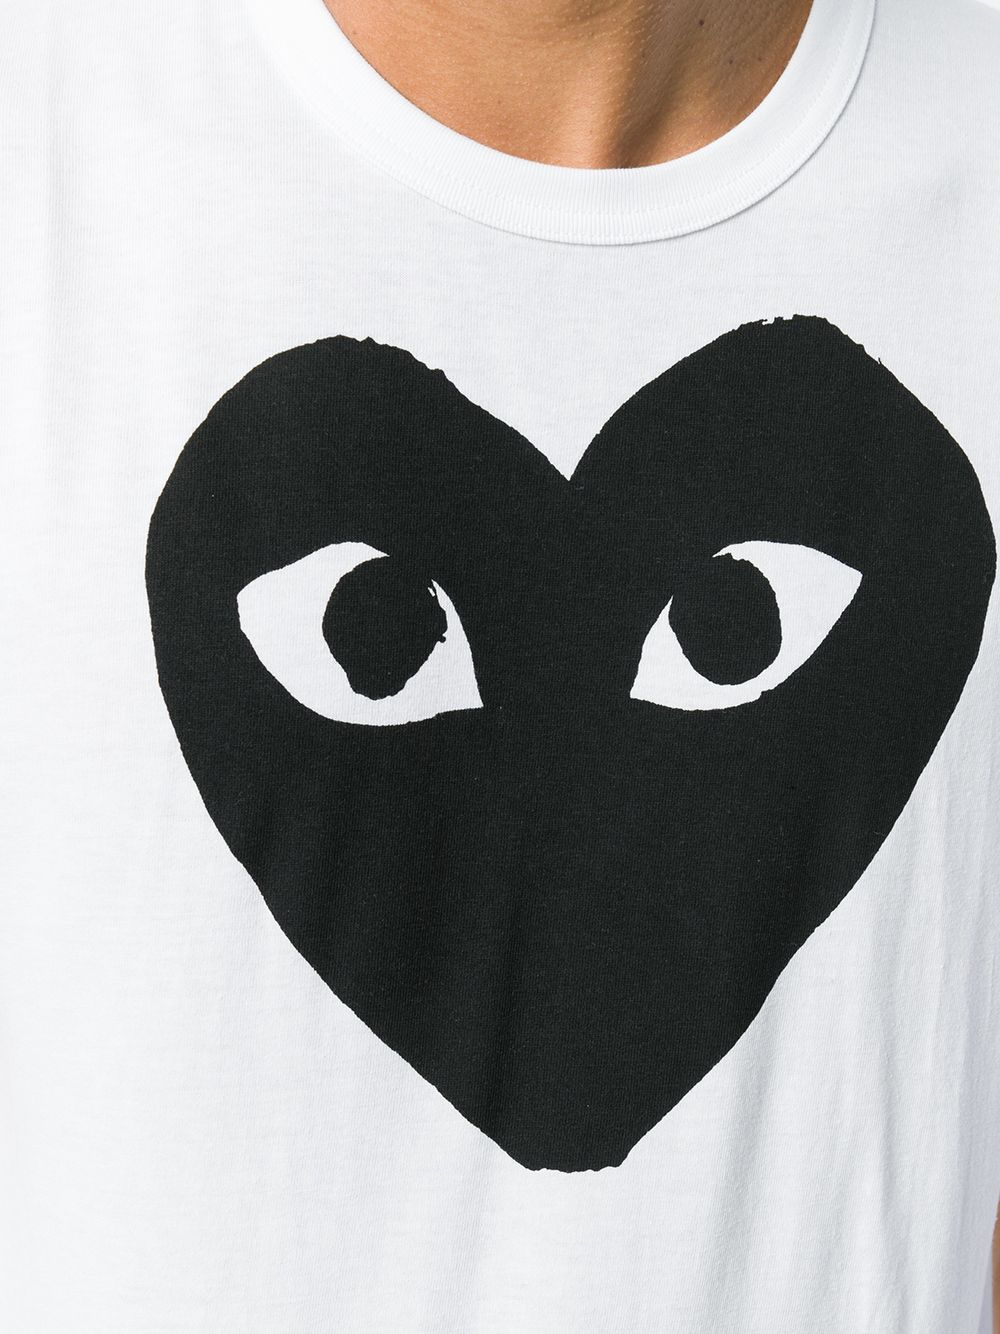 T-shirt black heart bianca